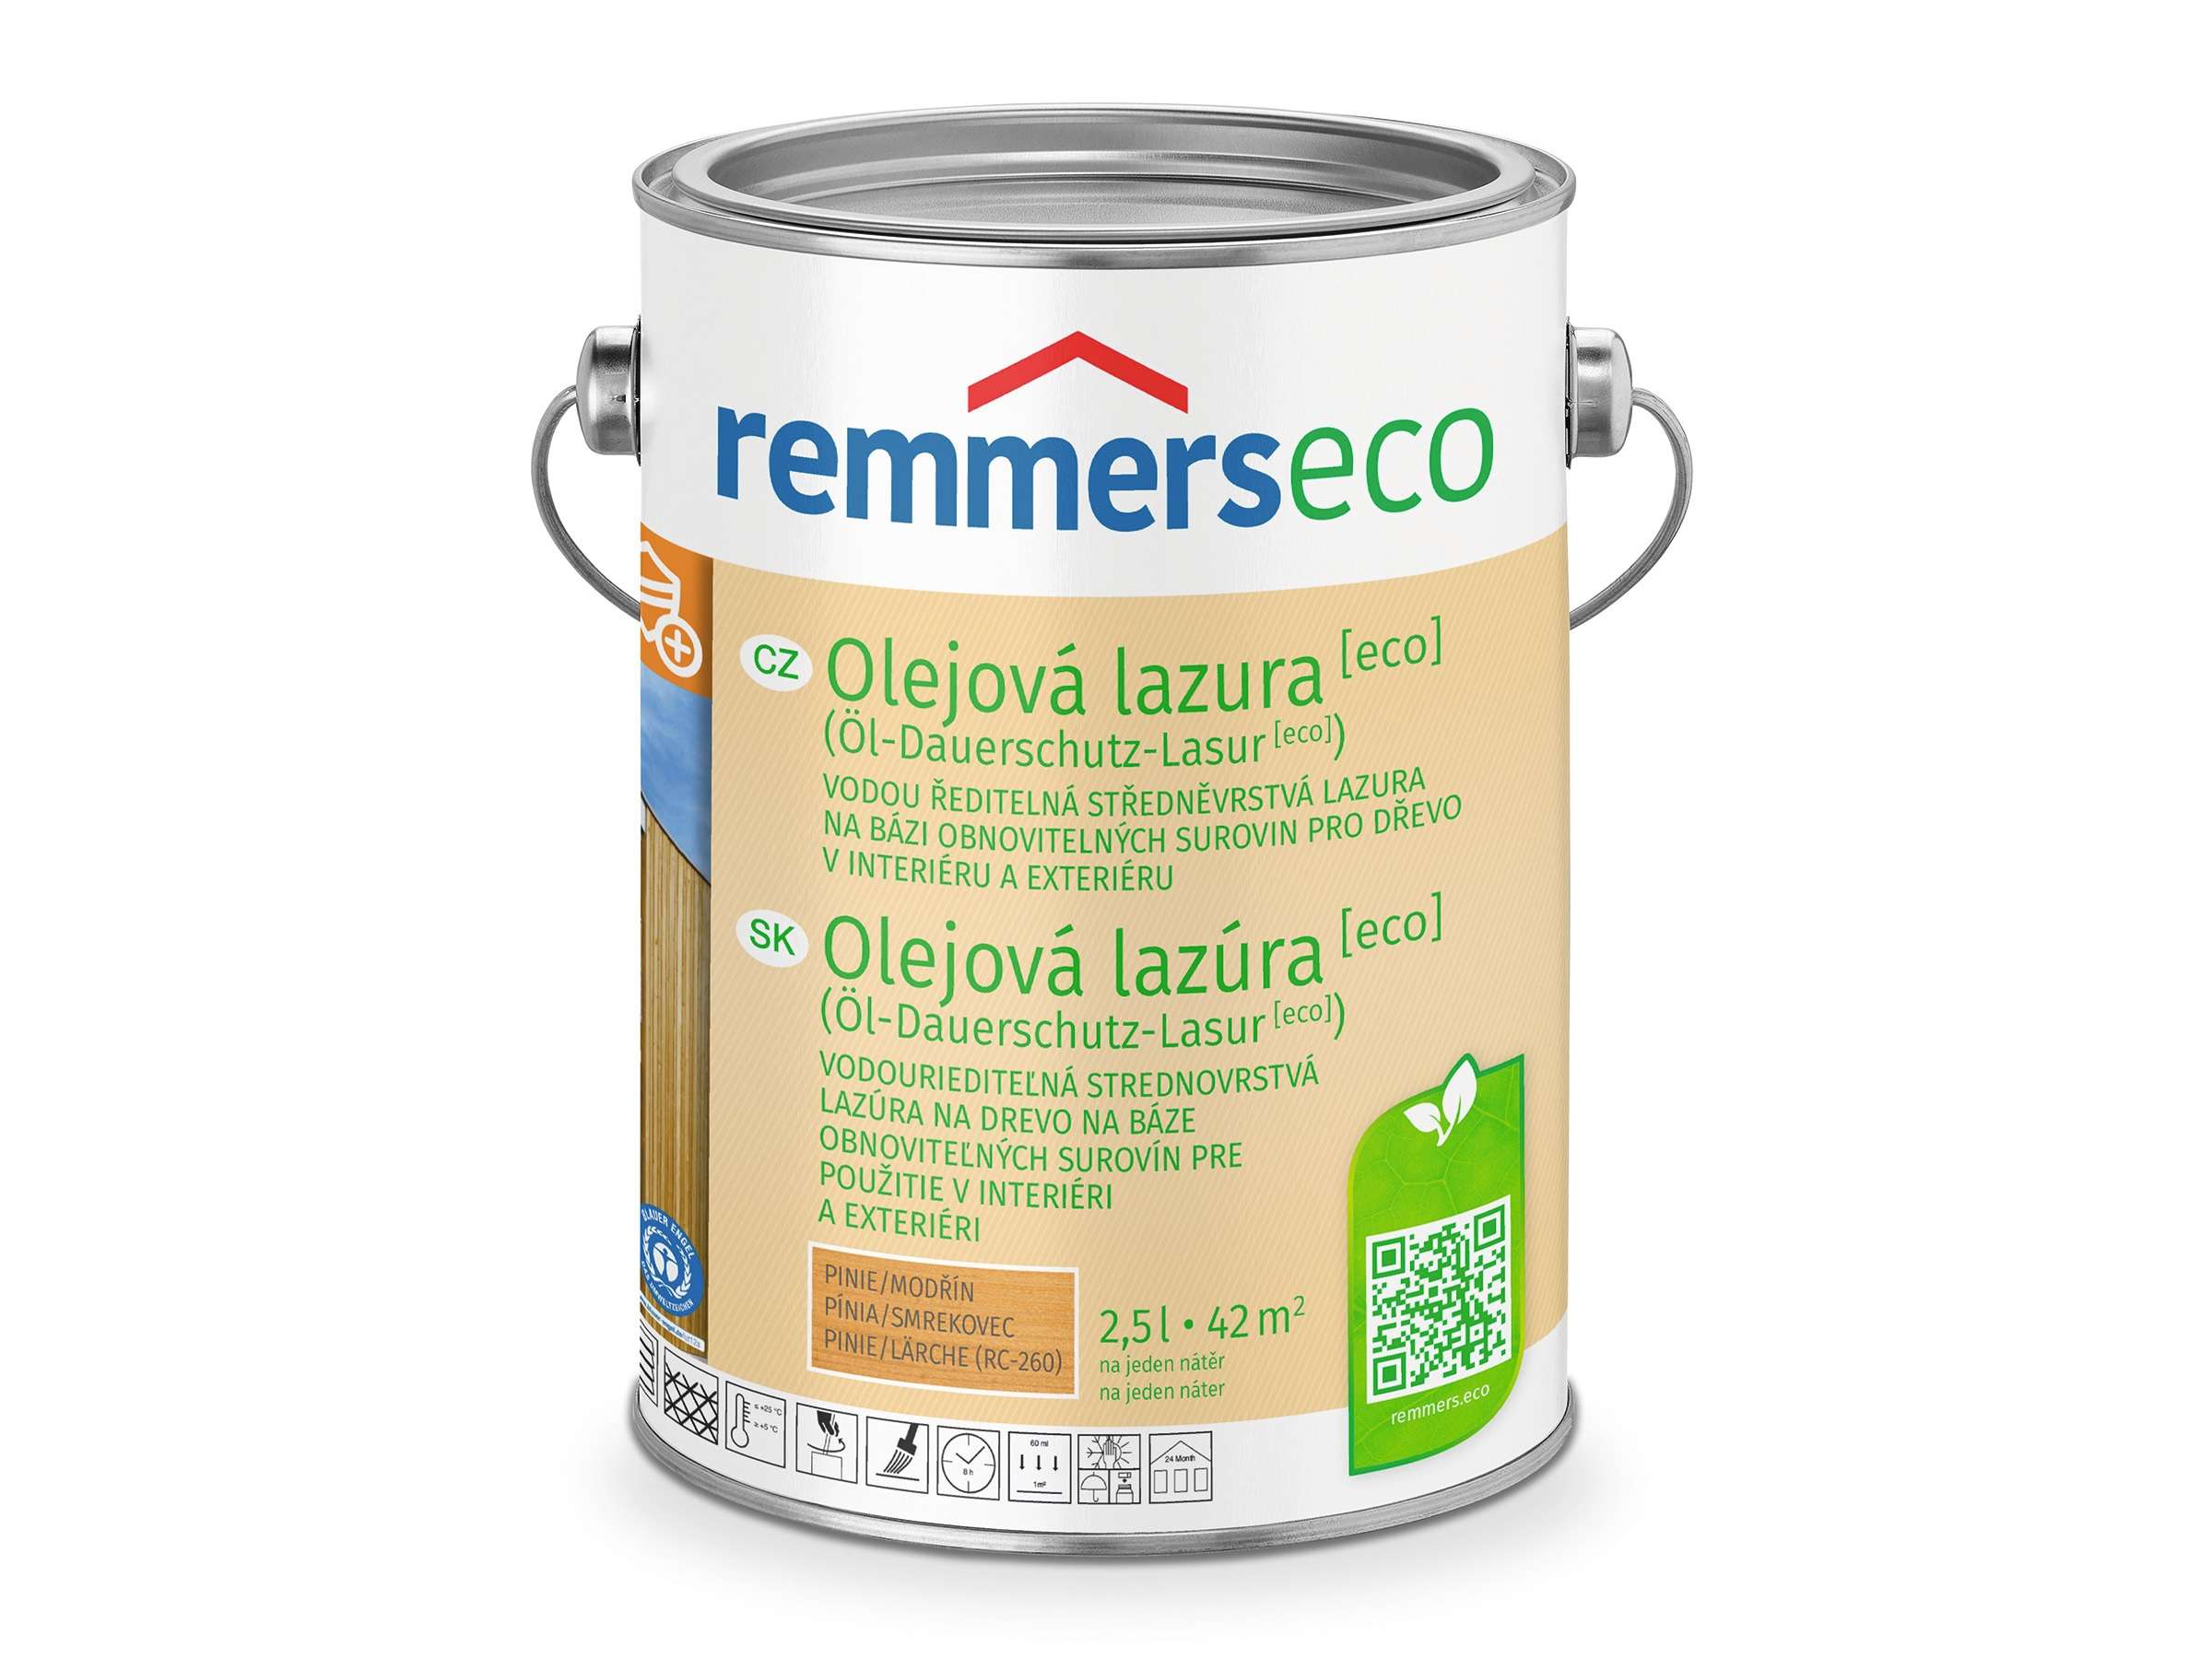 Remmers Olejová lazura eco * Öl-Dauerschutz-Lasur eco 1